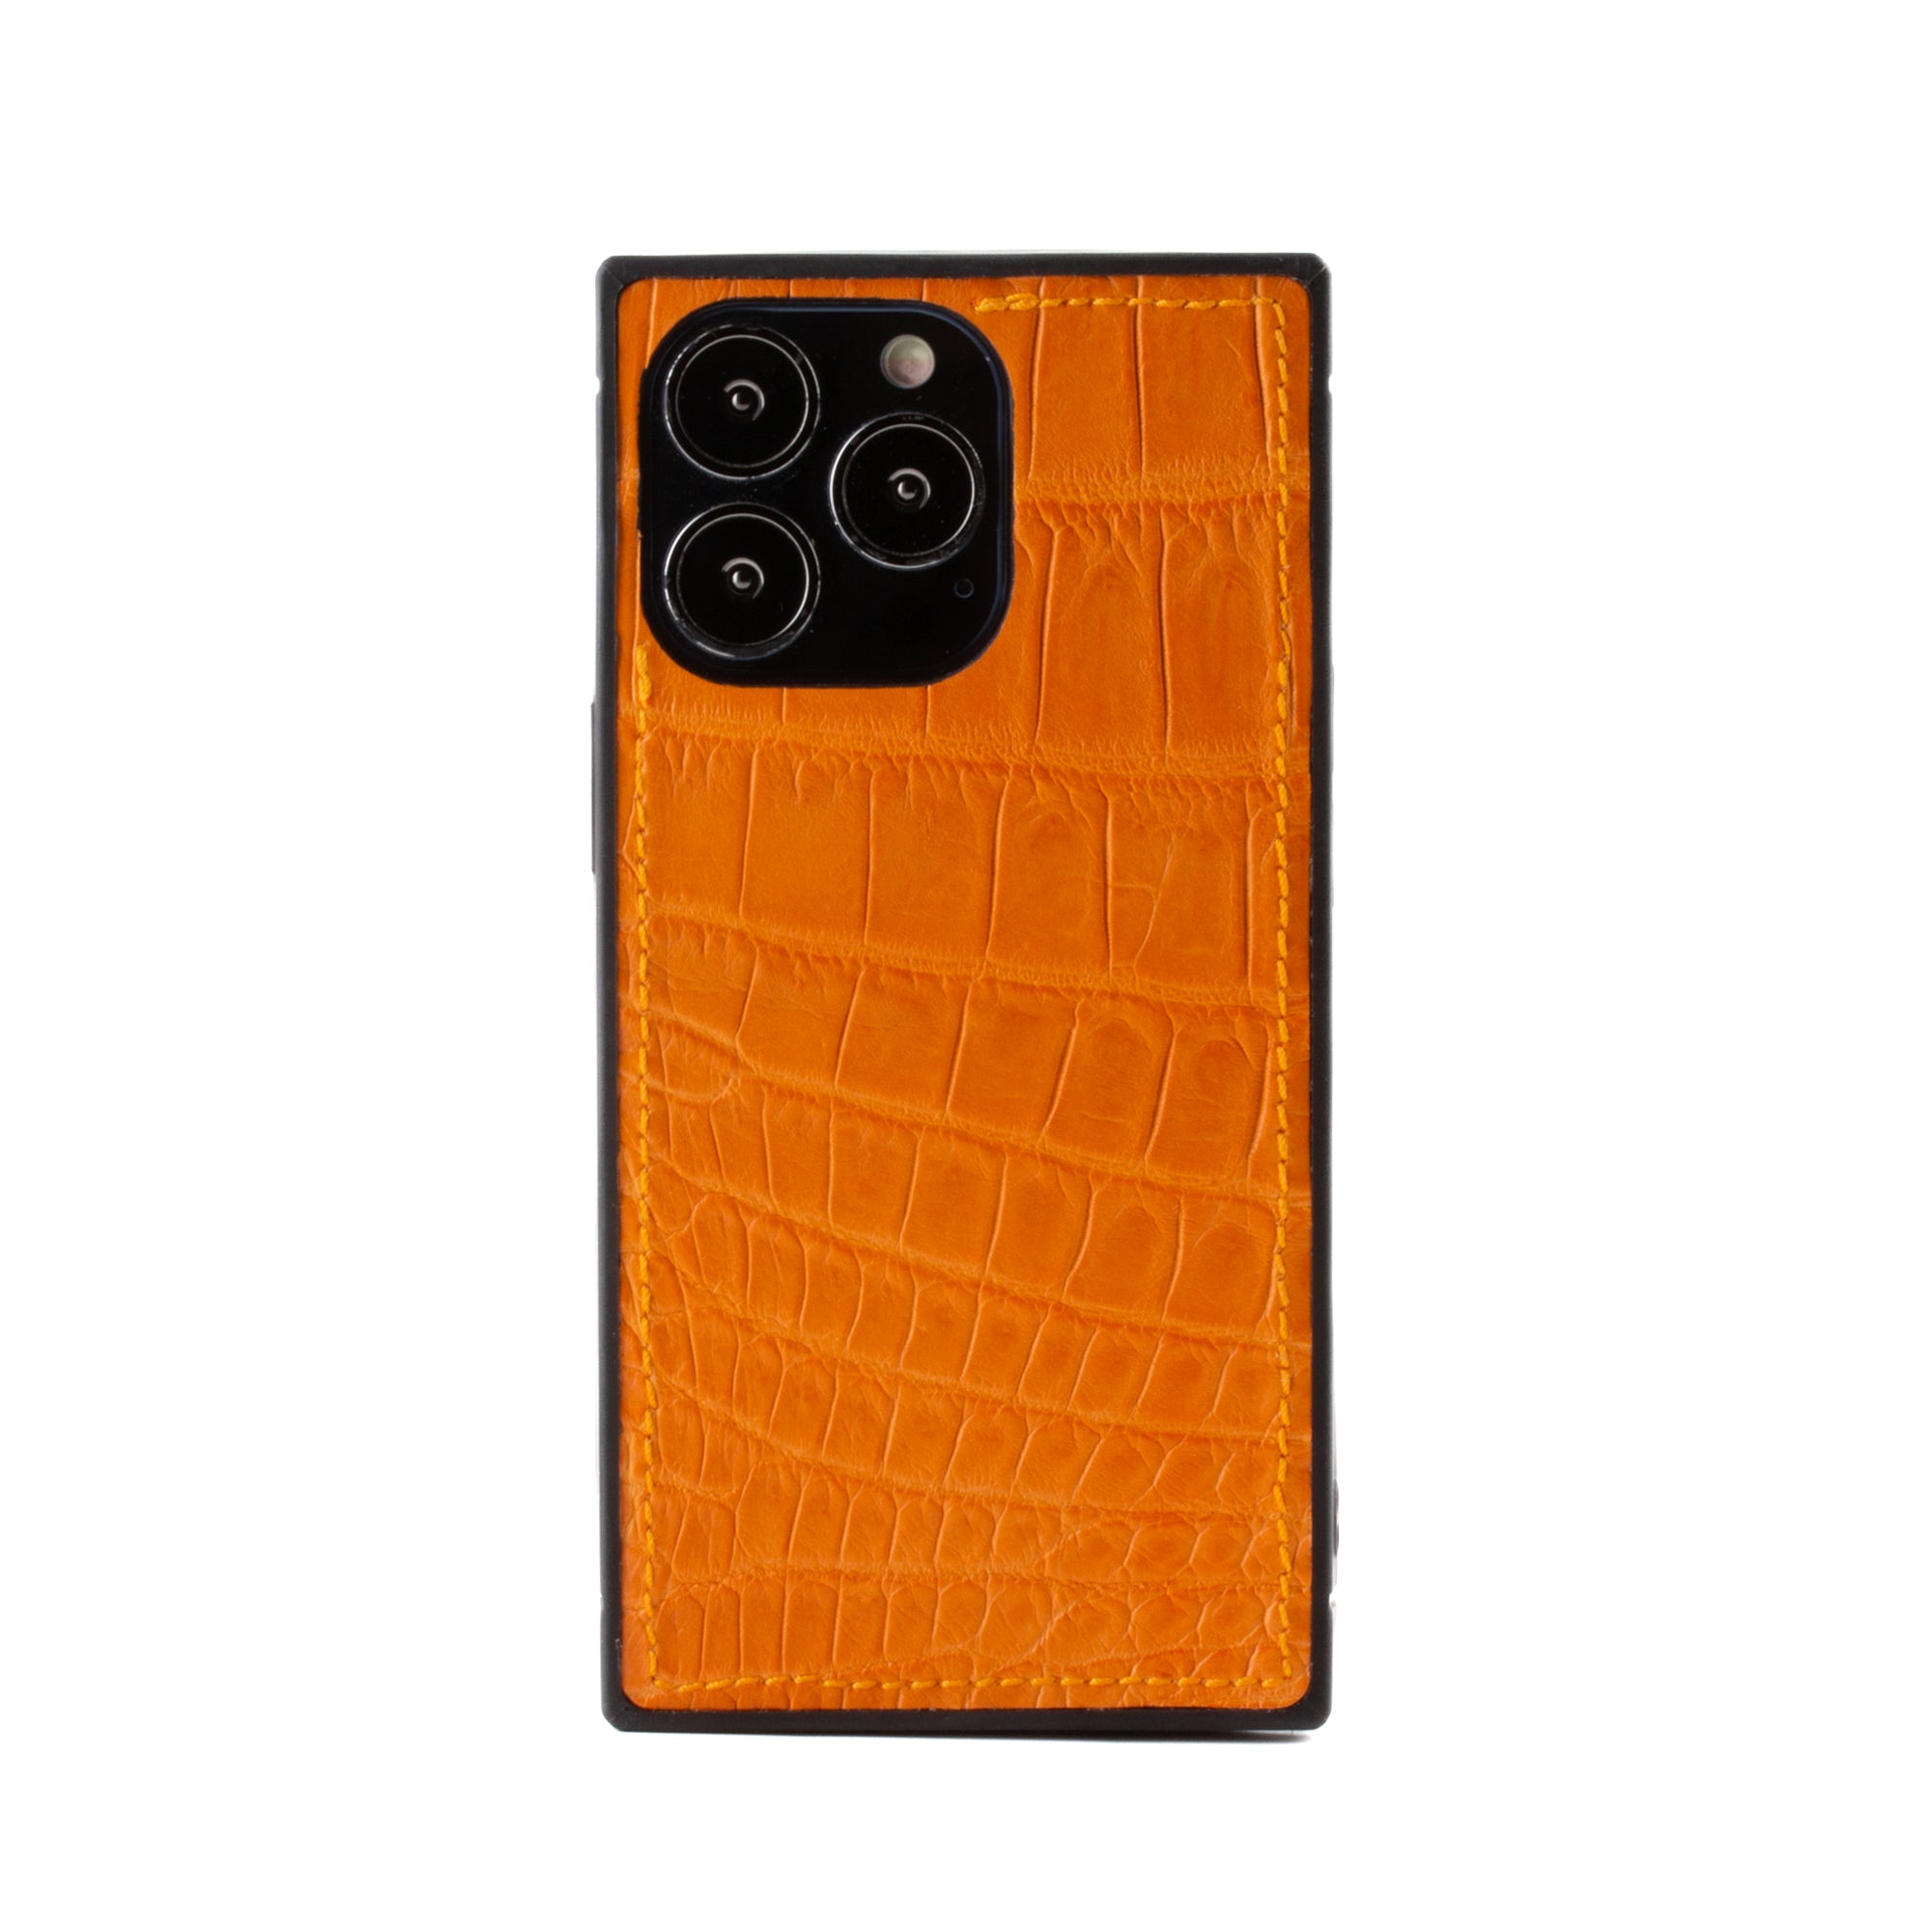 Clearance Sale - Leather iPhone "Square Case" - iPhone 13 Pro - Orange alligator